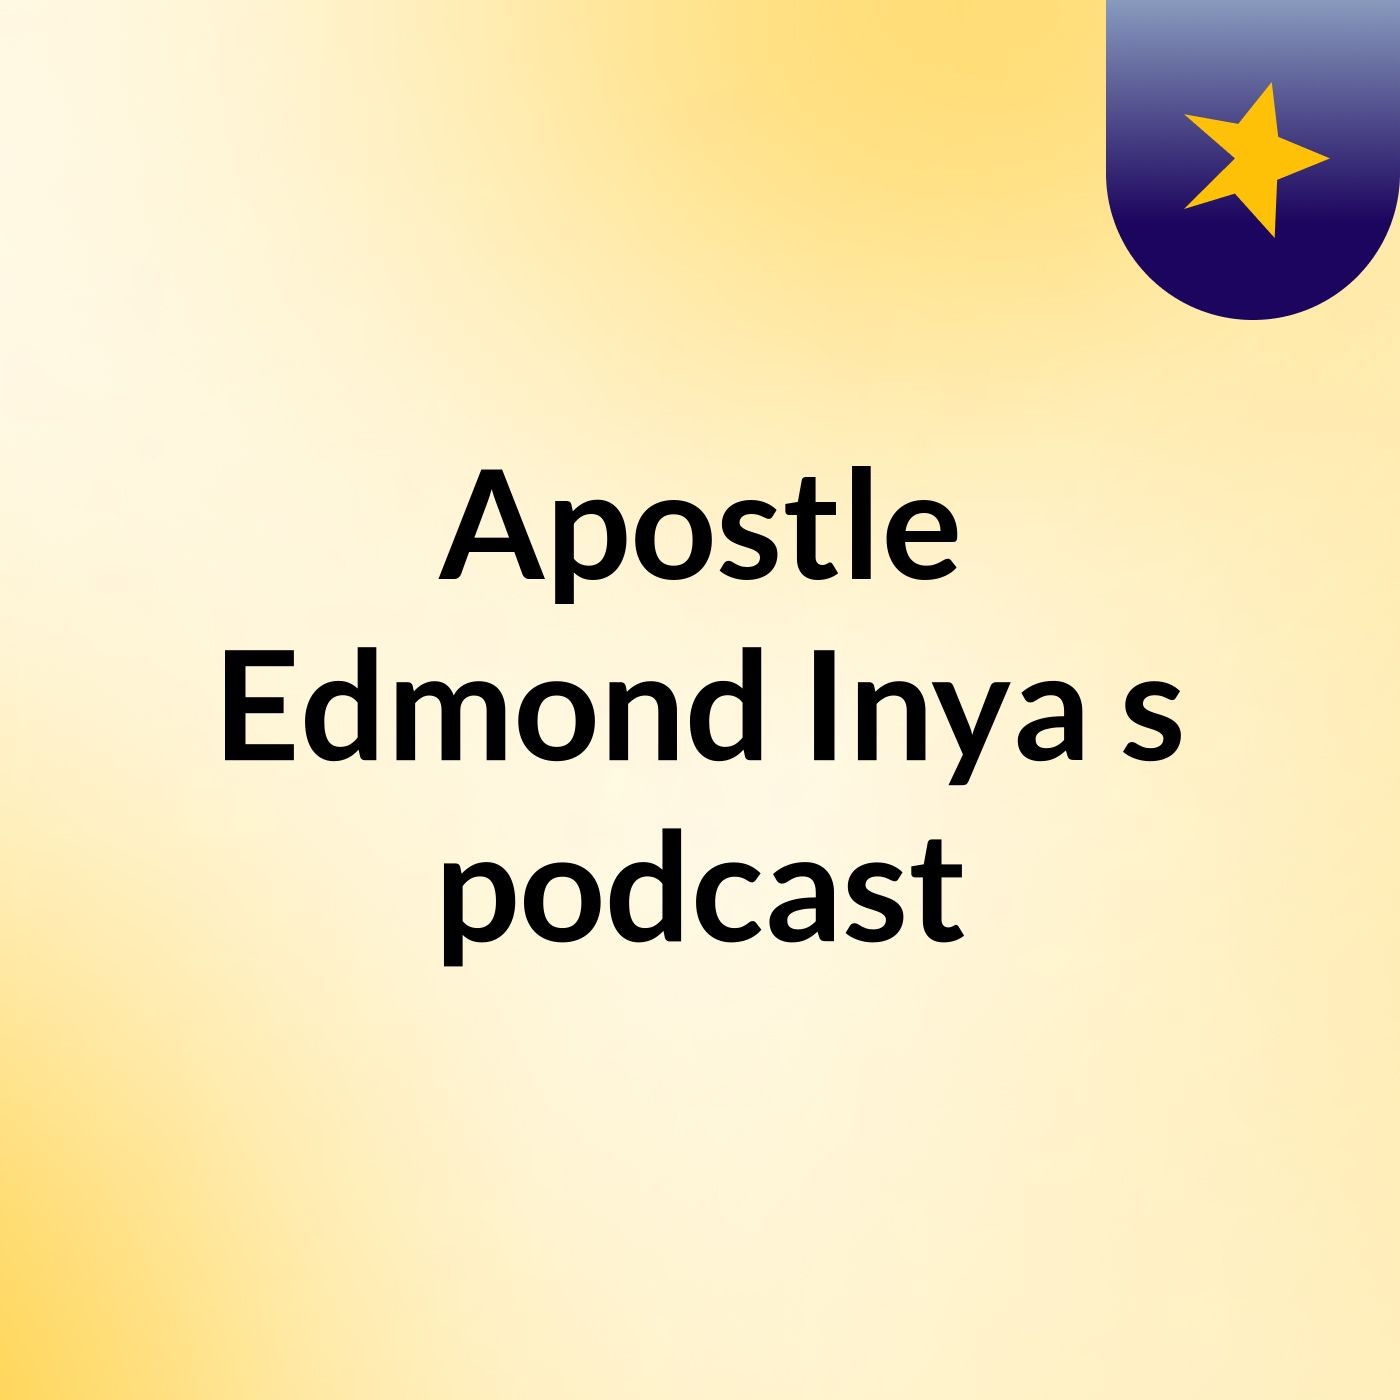 Episode 3 - Apostle Edmond Inya's podcast